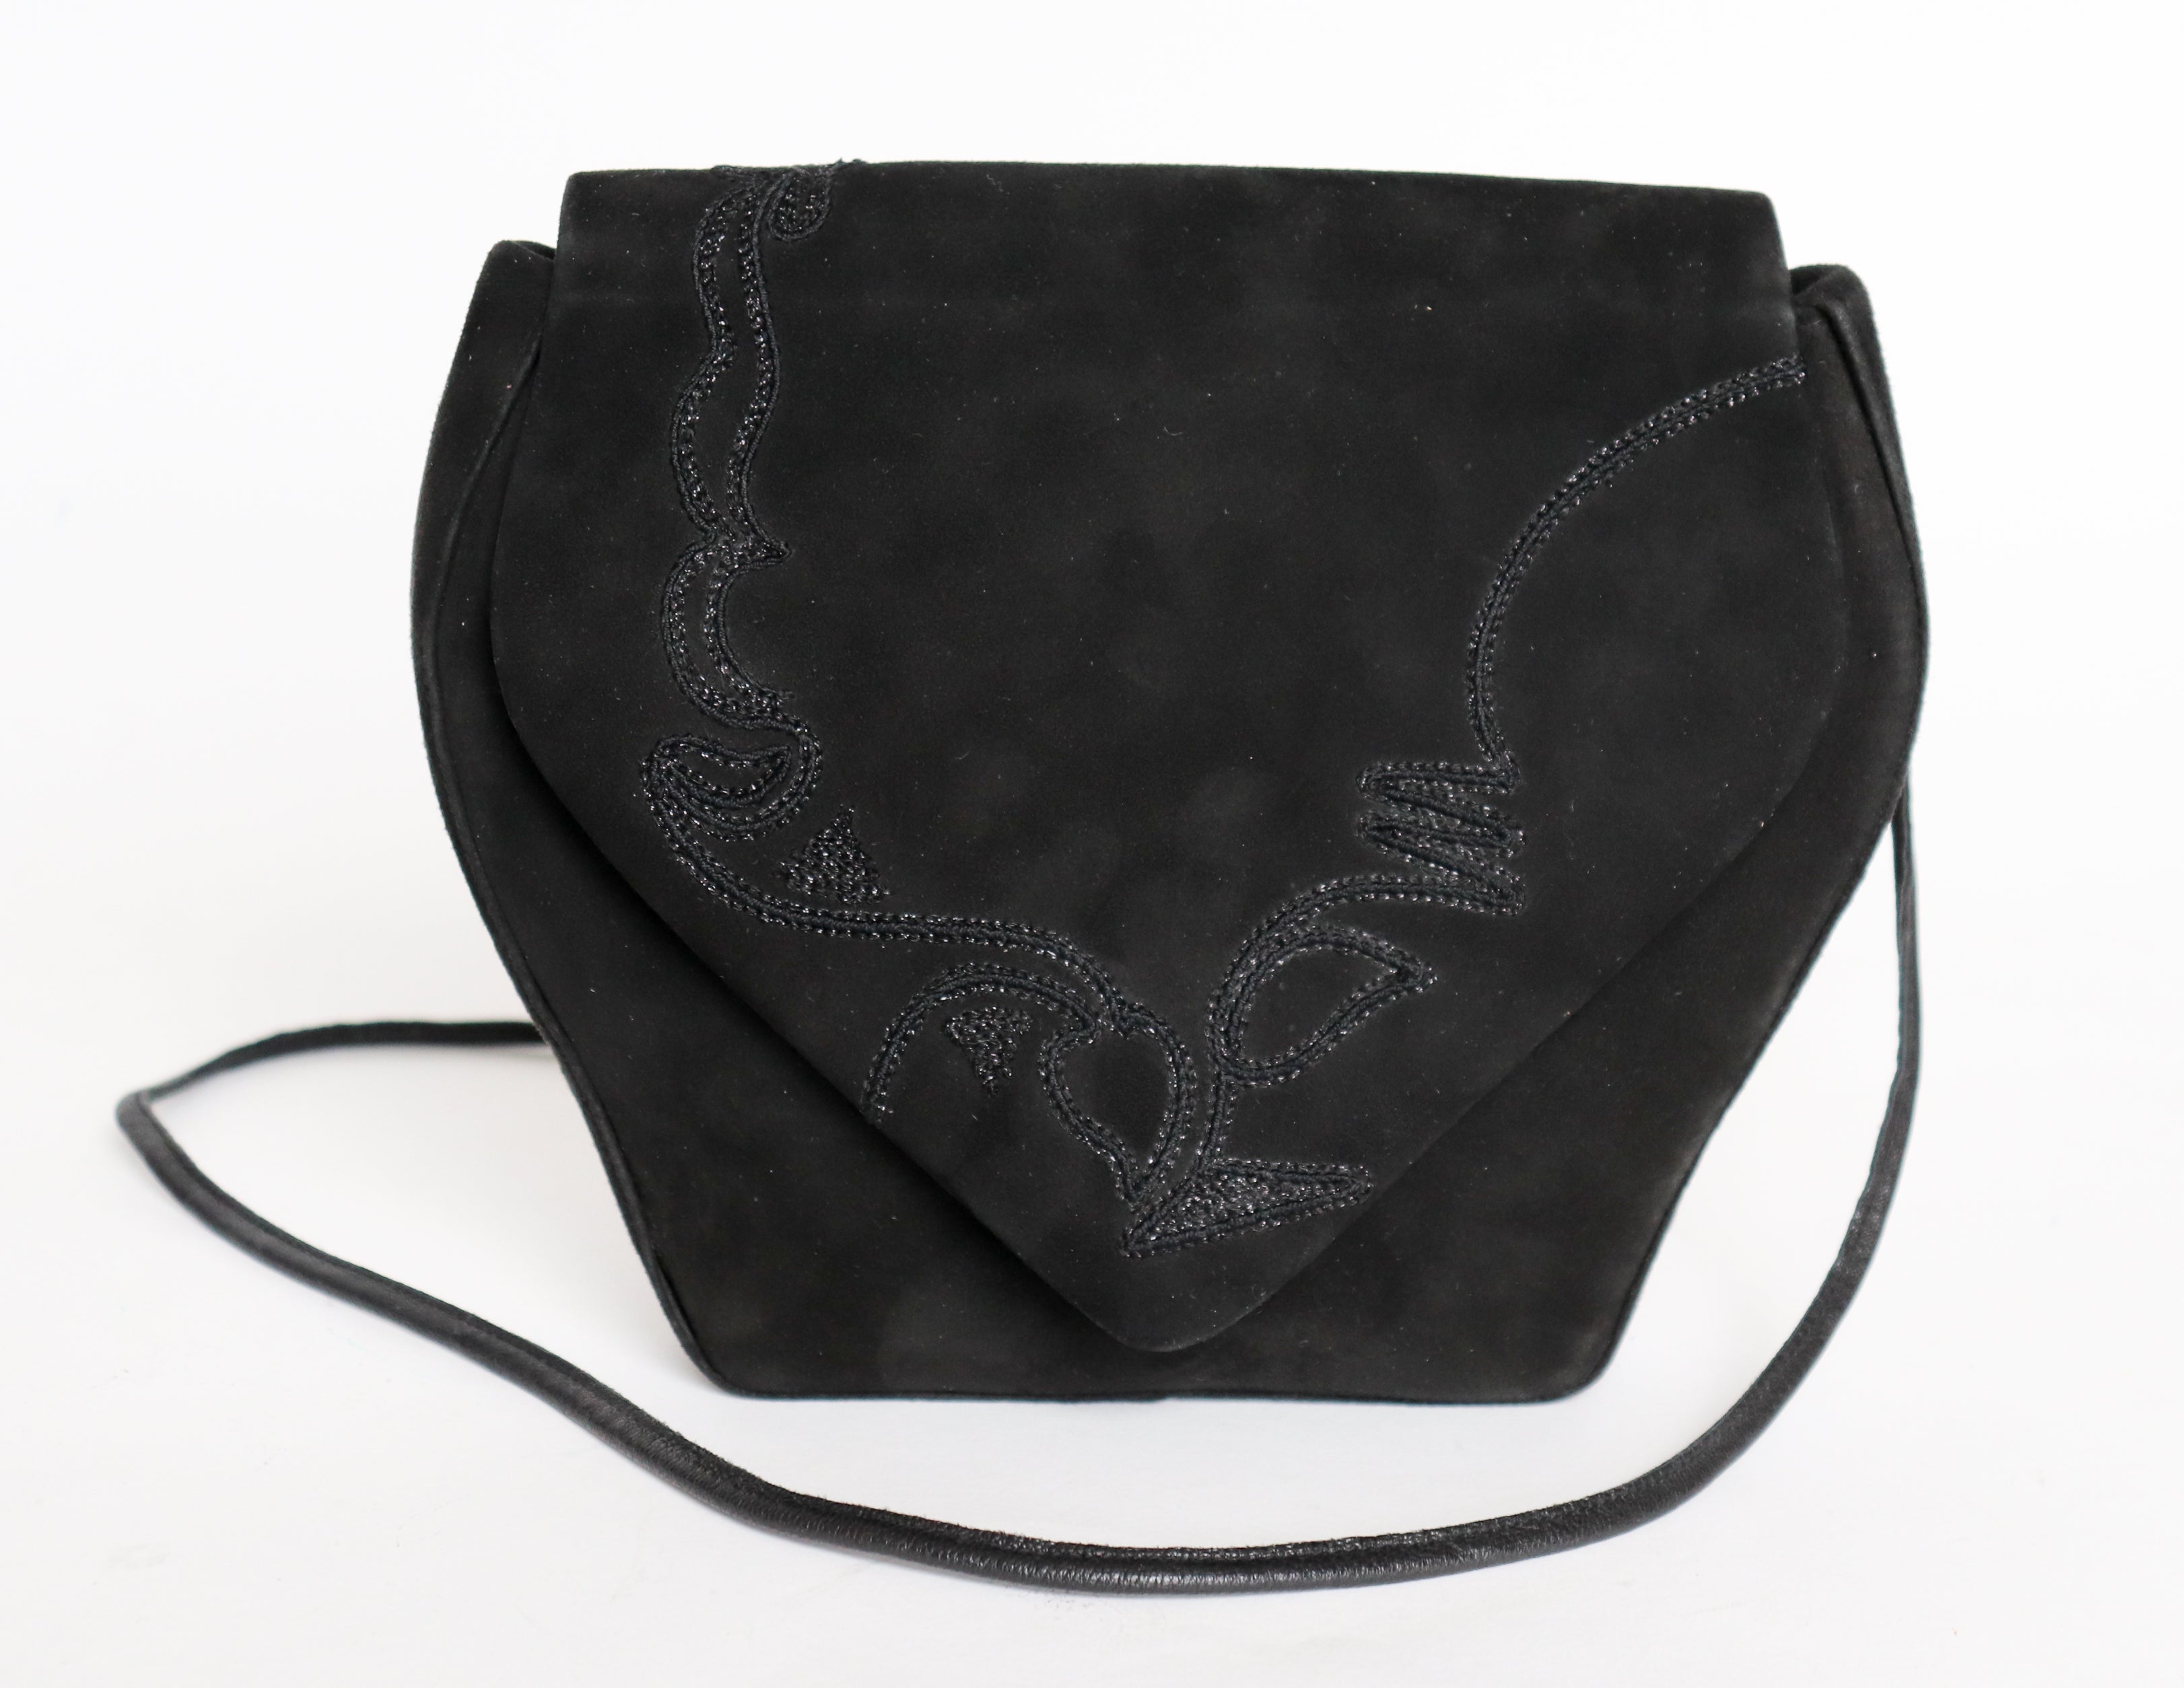 Bruno Magli Vintage Crossbody Bag - Black Suede Leather - 1980s - Small